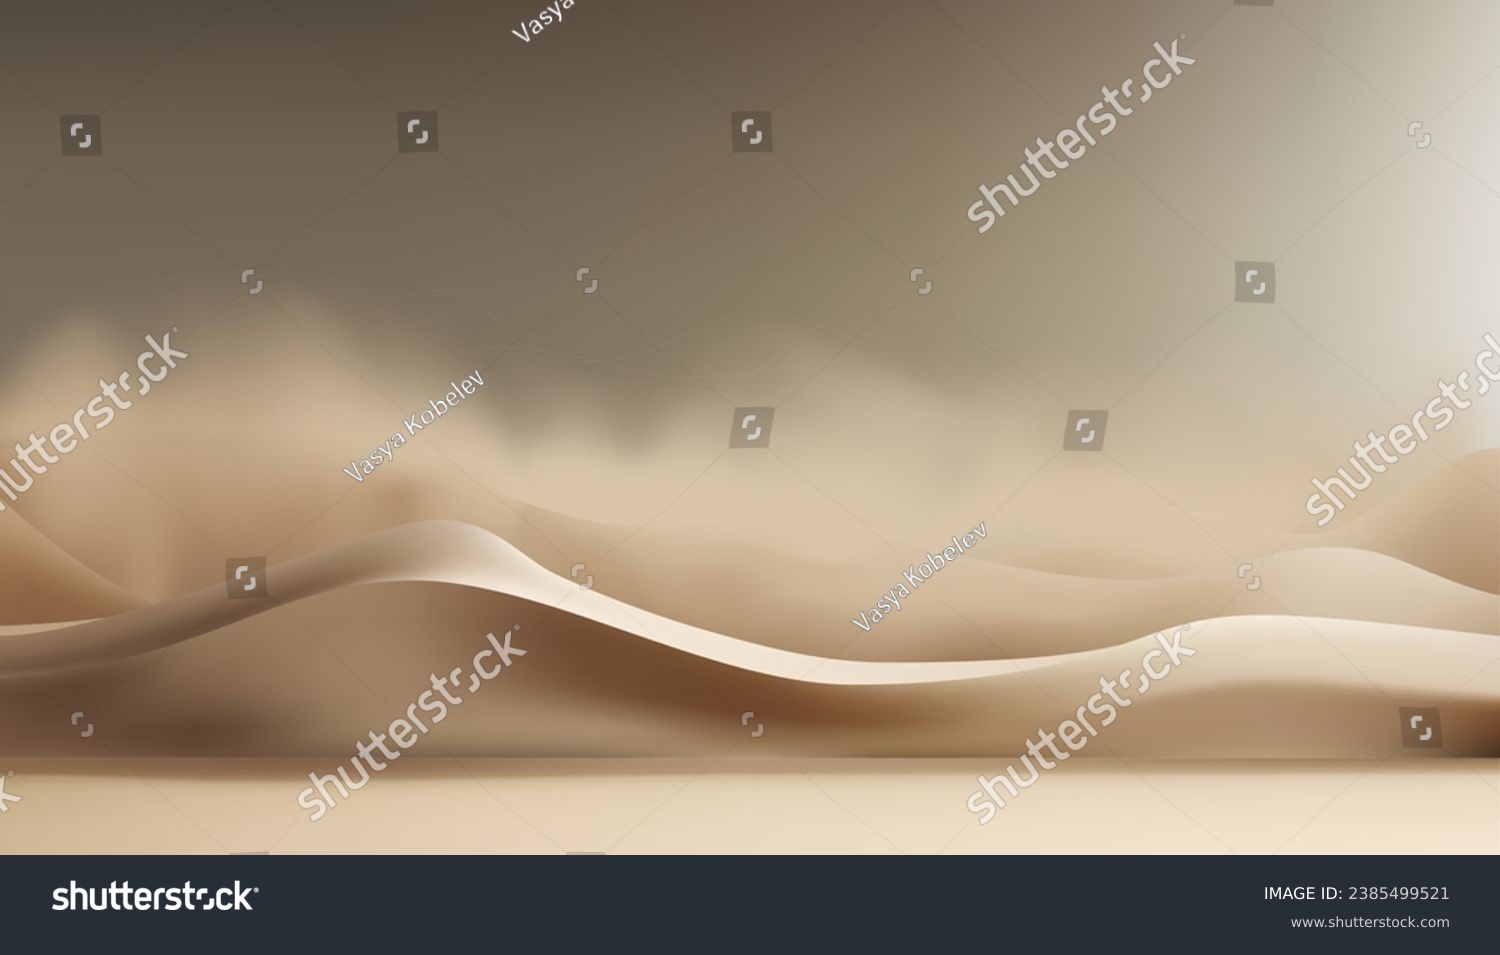 SVG of Beige sand dune desert with smoke neutral showroom studio background 3d realistic vector illustration. Sandstone savannah natural environment backdrop advertising space for product presentation svg